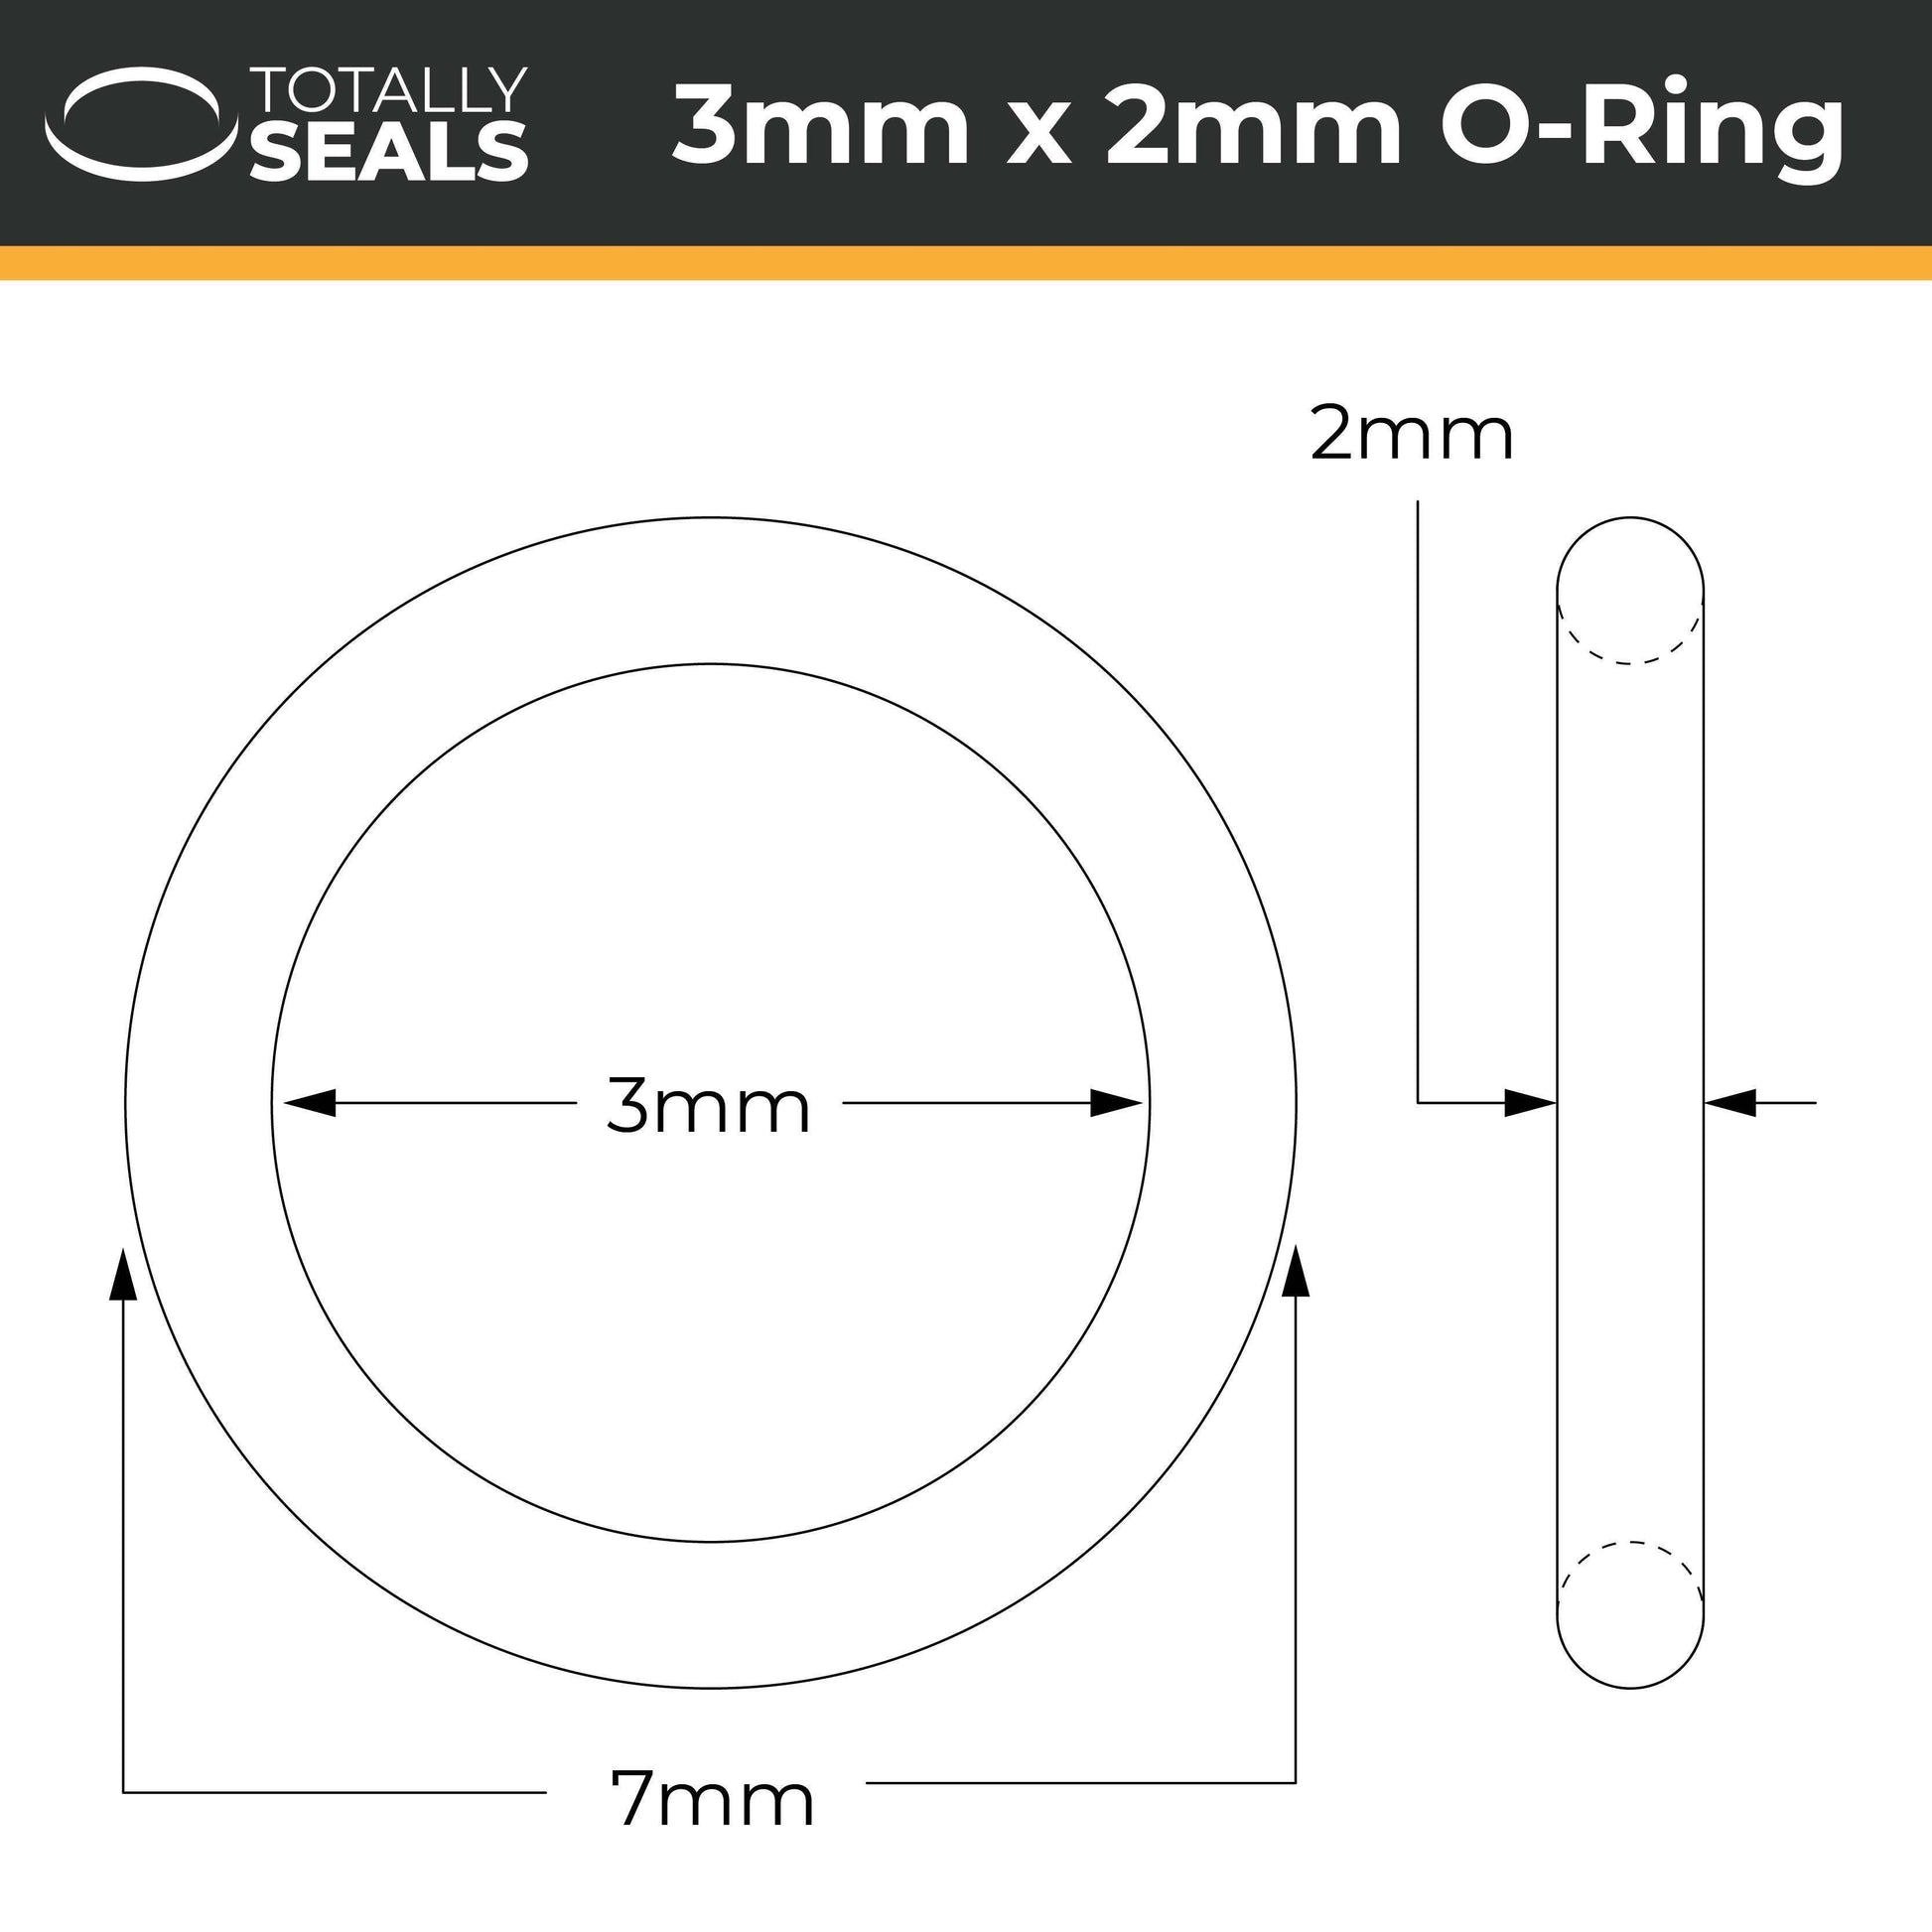 3mm x 2mm (7mm OD) FKM (Viton™) O-Rings - Totally Seals®